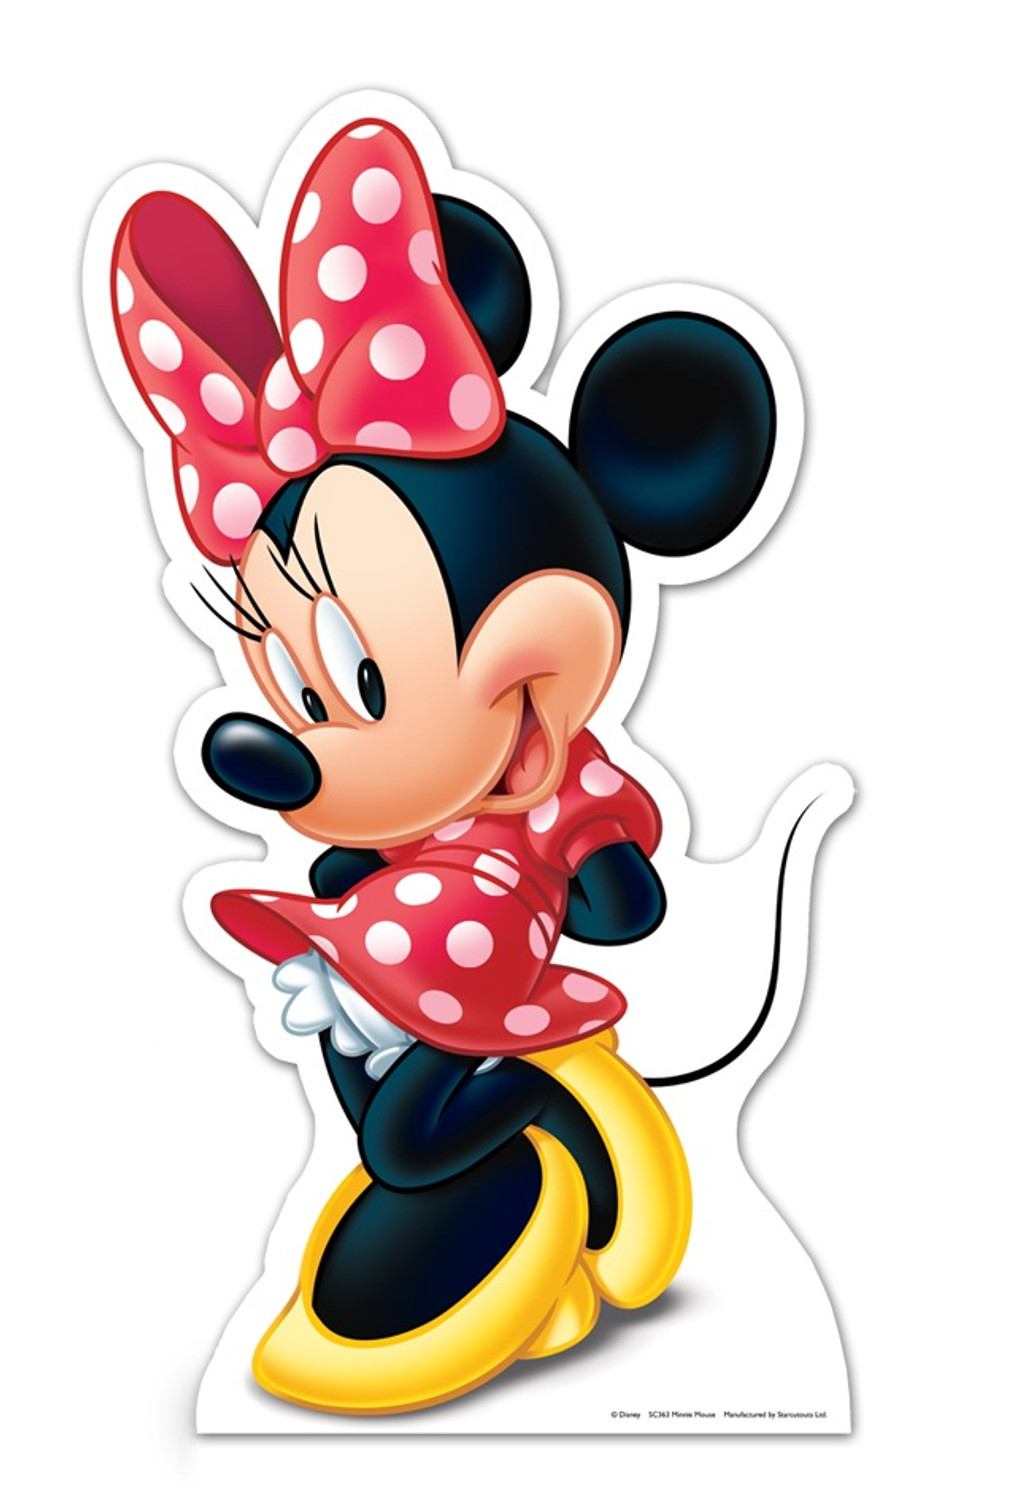 Minnie Mouse Lifesize Cardboard Cutout / Standee (Disney)